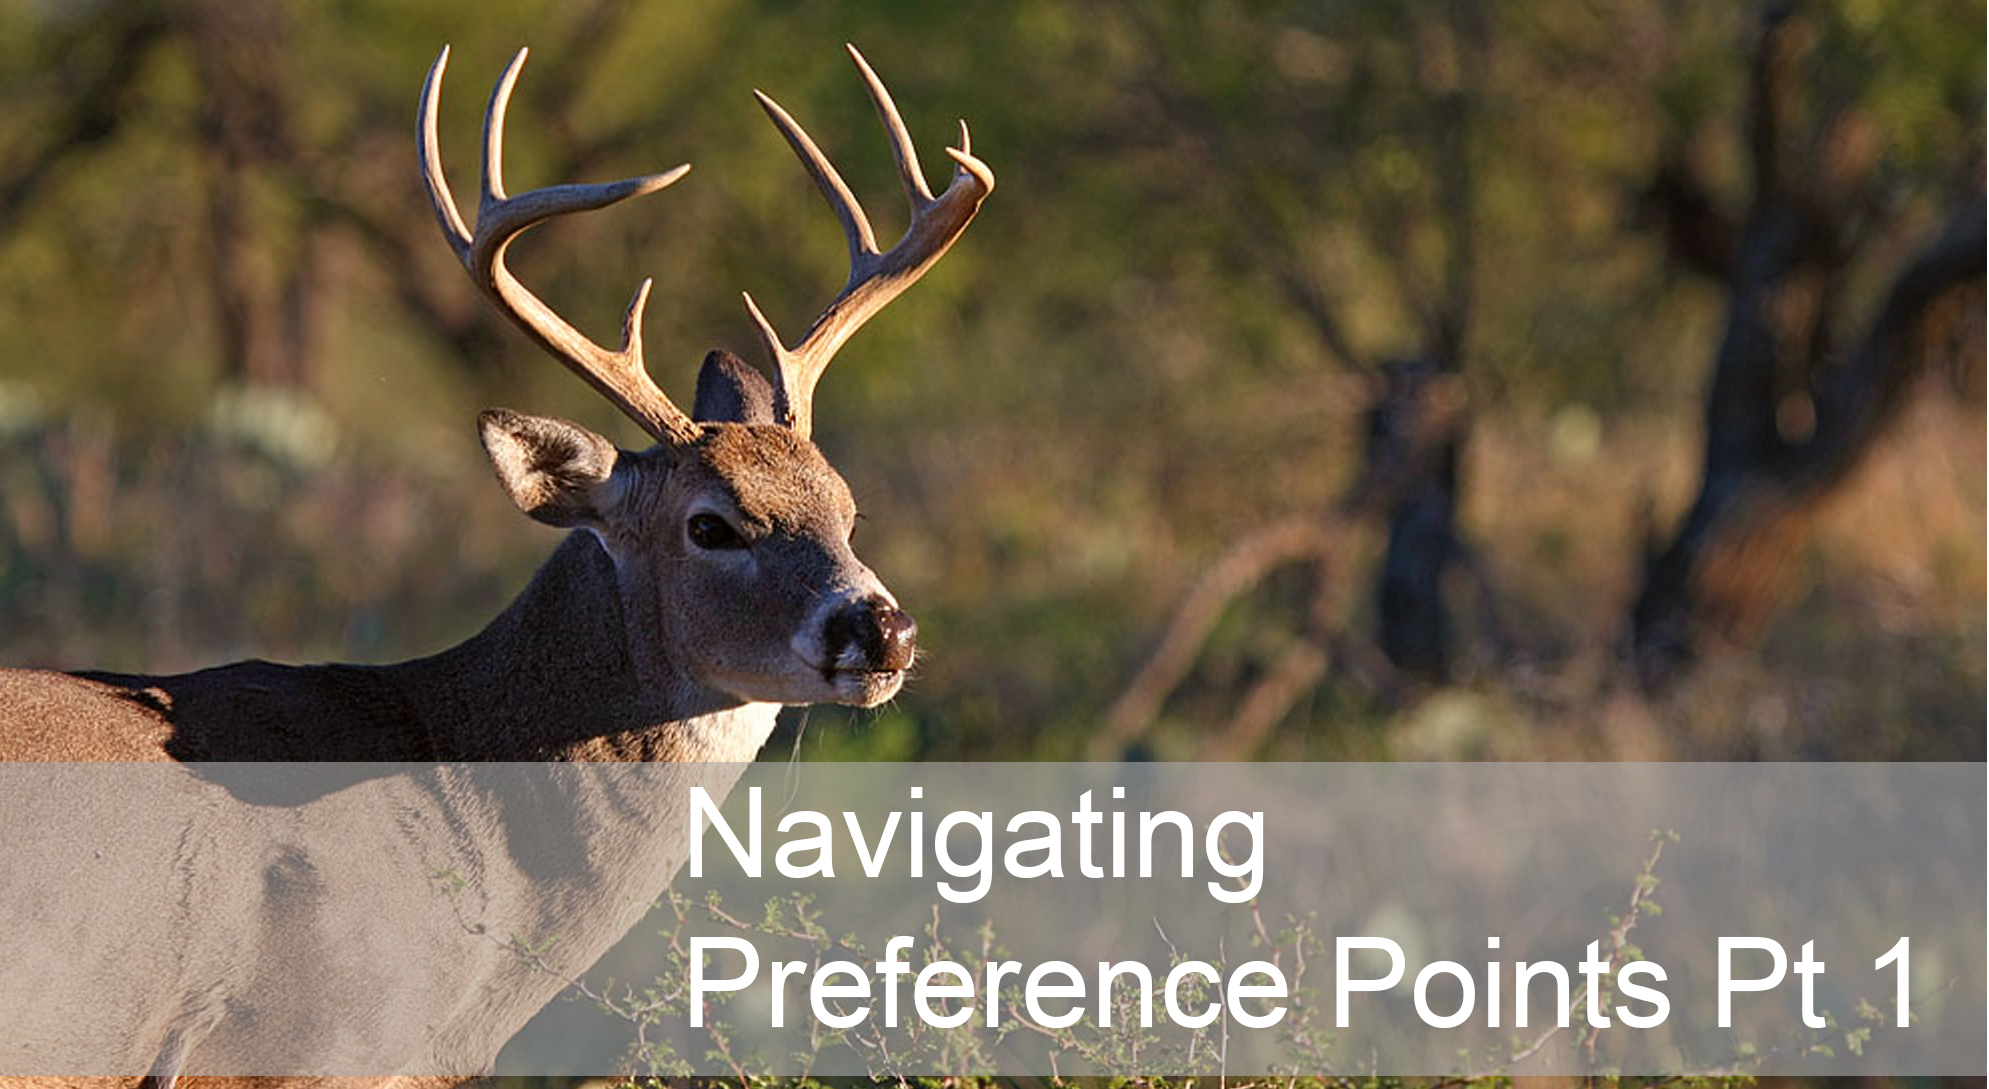 #HuntFishTravel Ep 211 – Navigating Preference Points with Austin Kramer